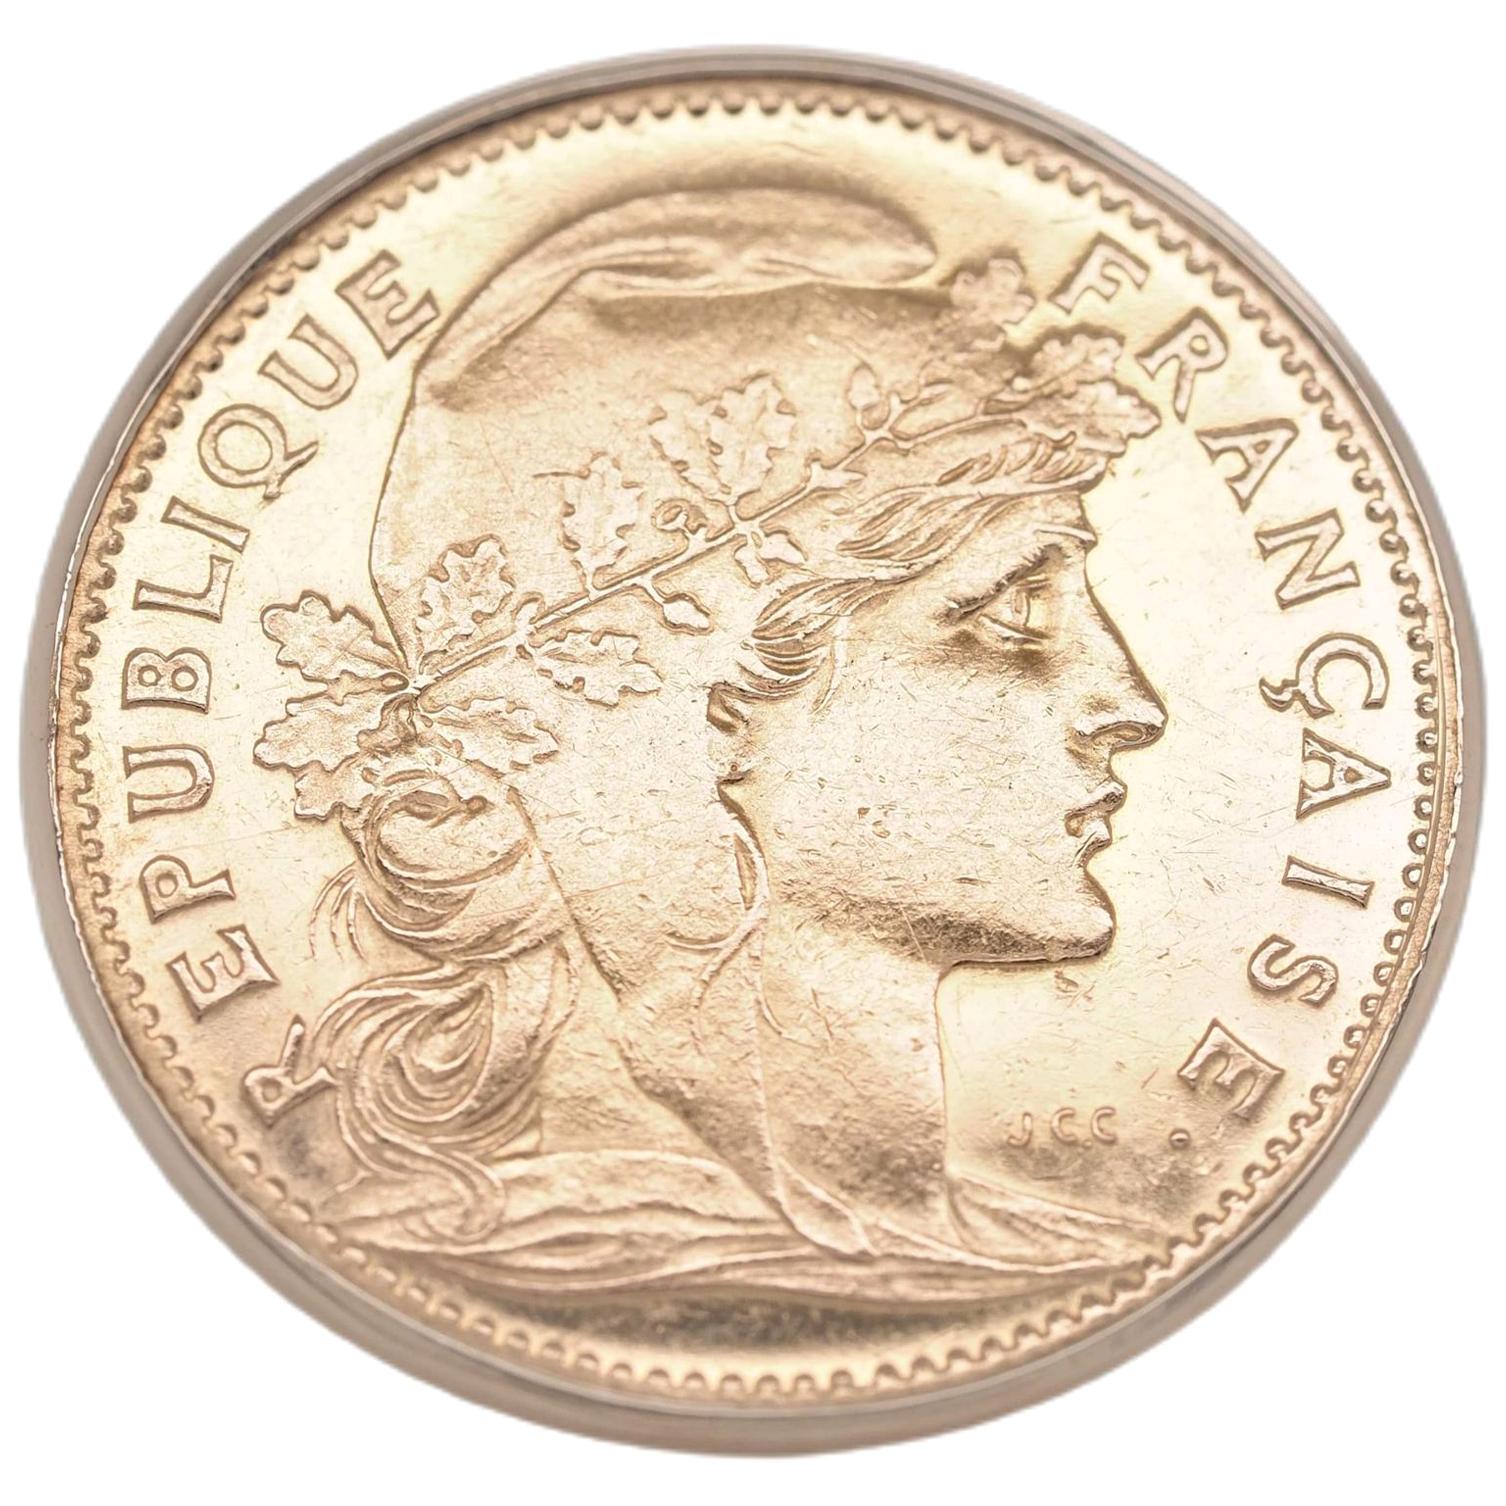 France Or Pièce de 20 Francs 1907 Bague Or Jaune 14 carats